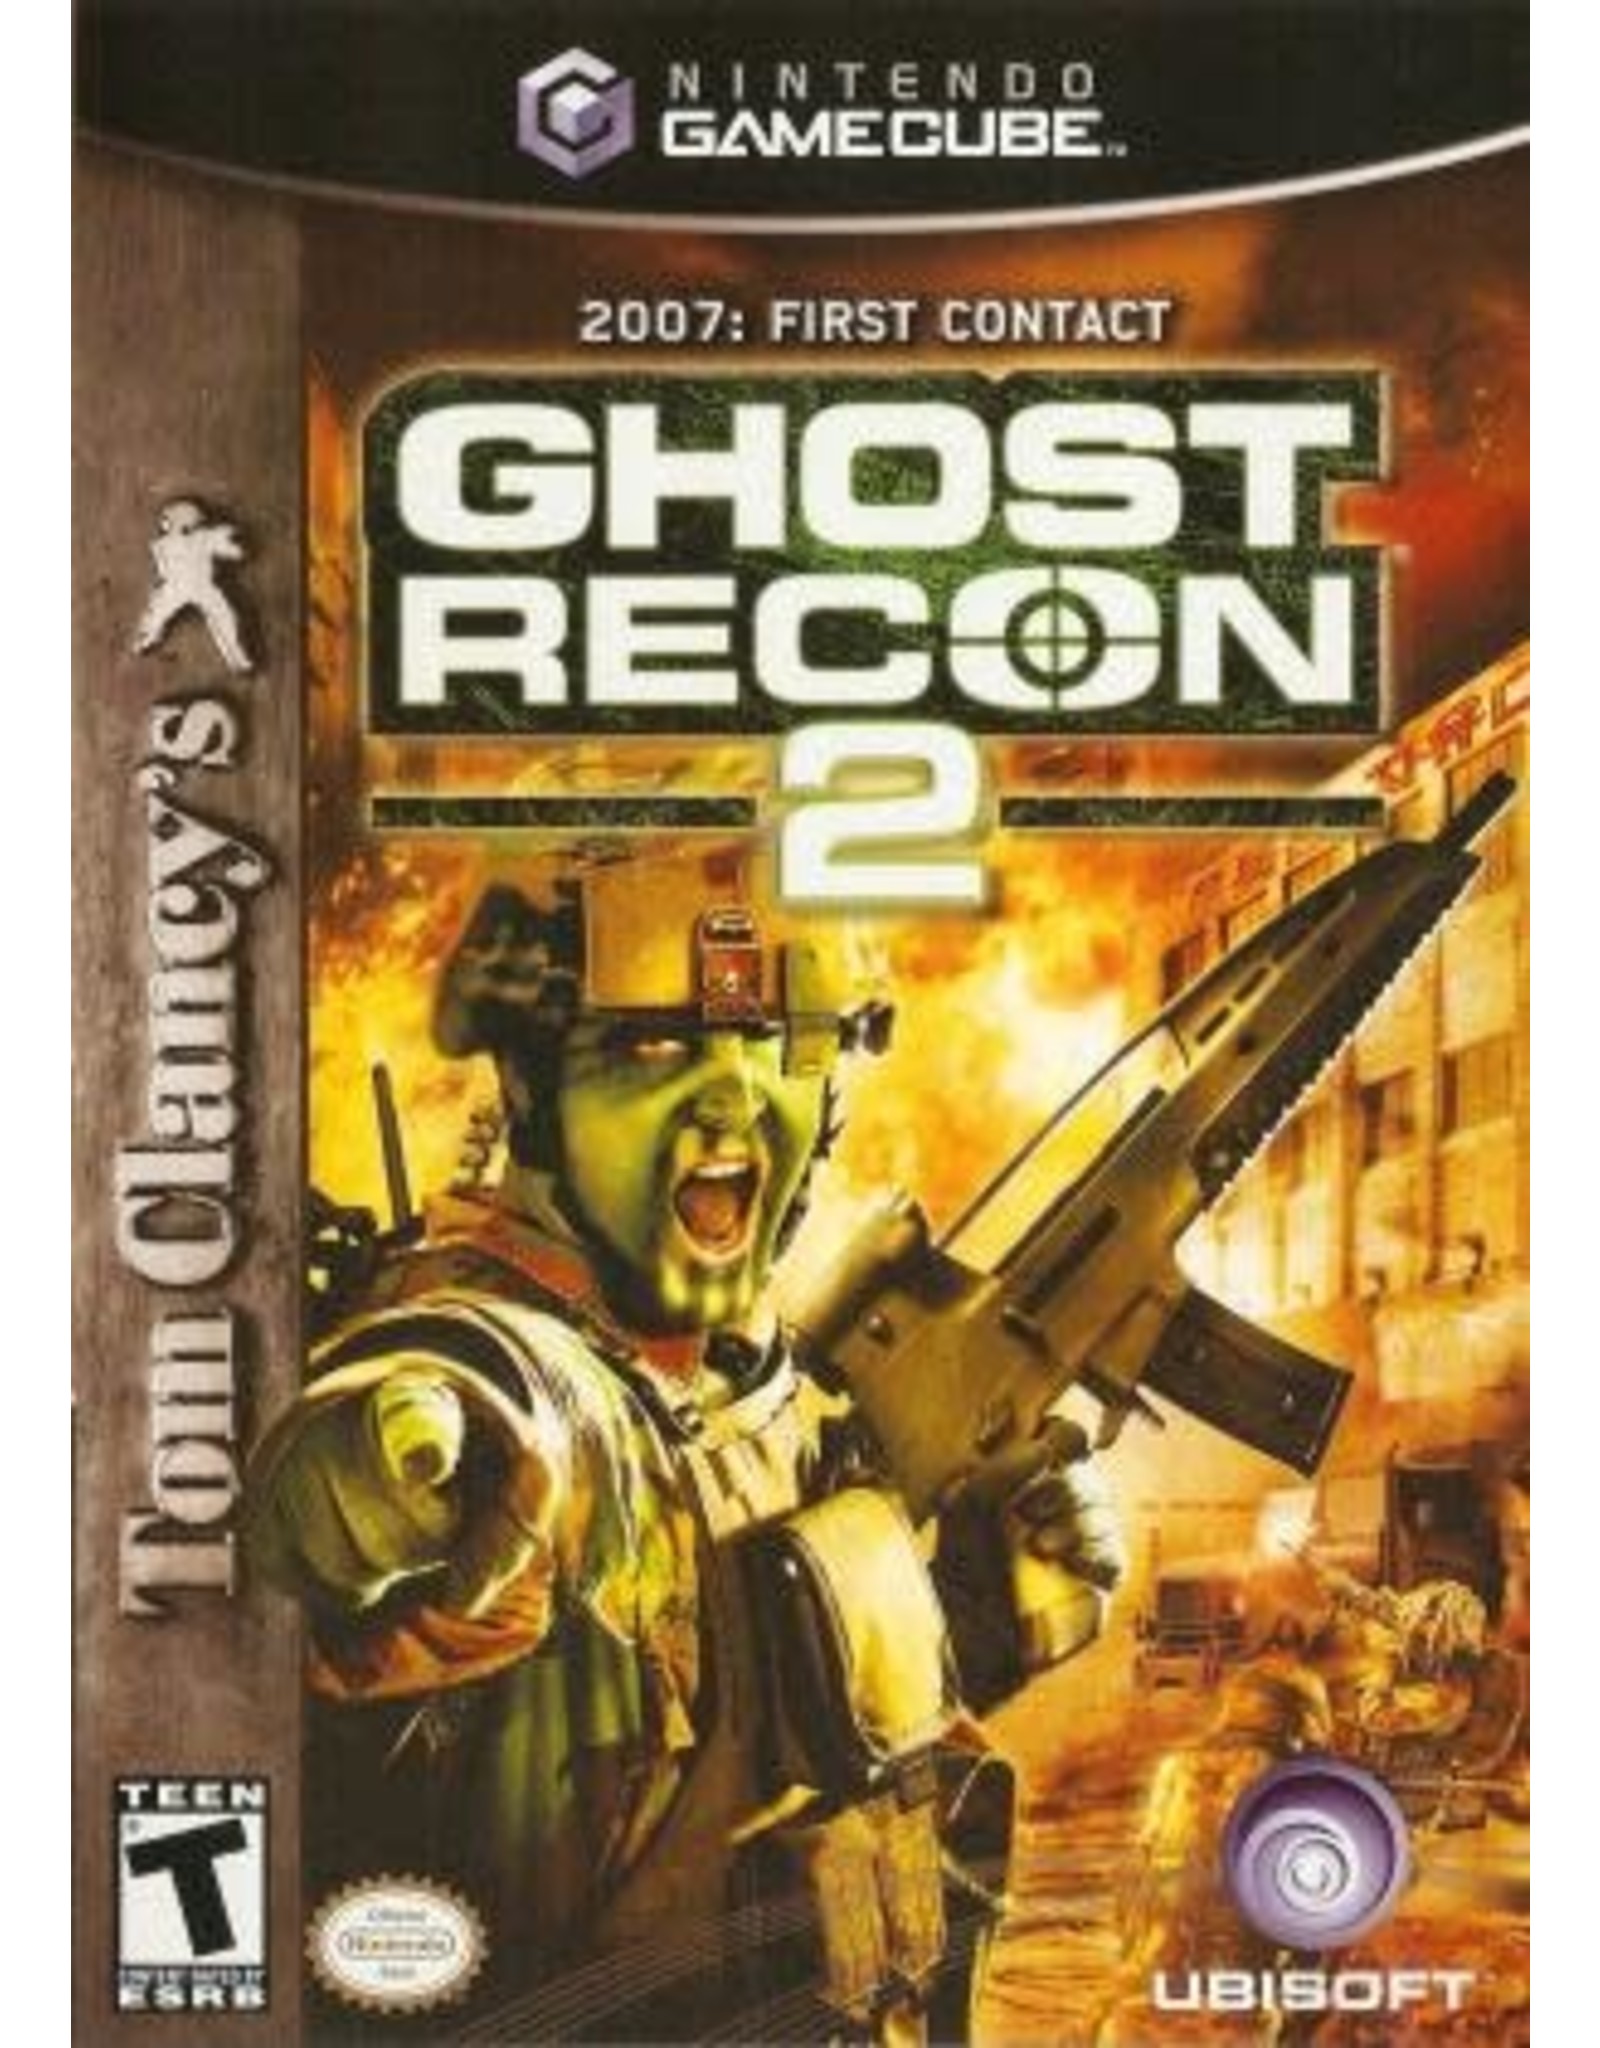 Gamecube Ghost Recon 2 (No Manual)